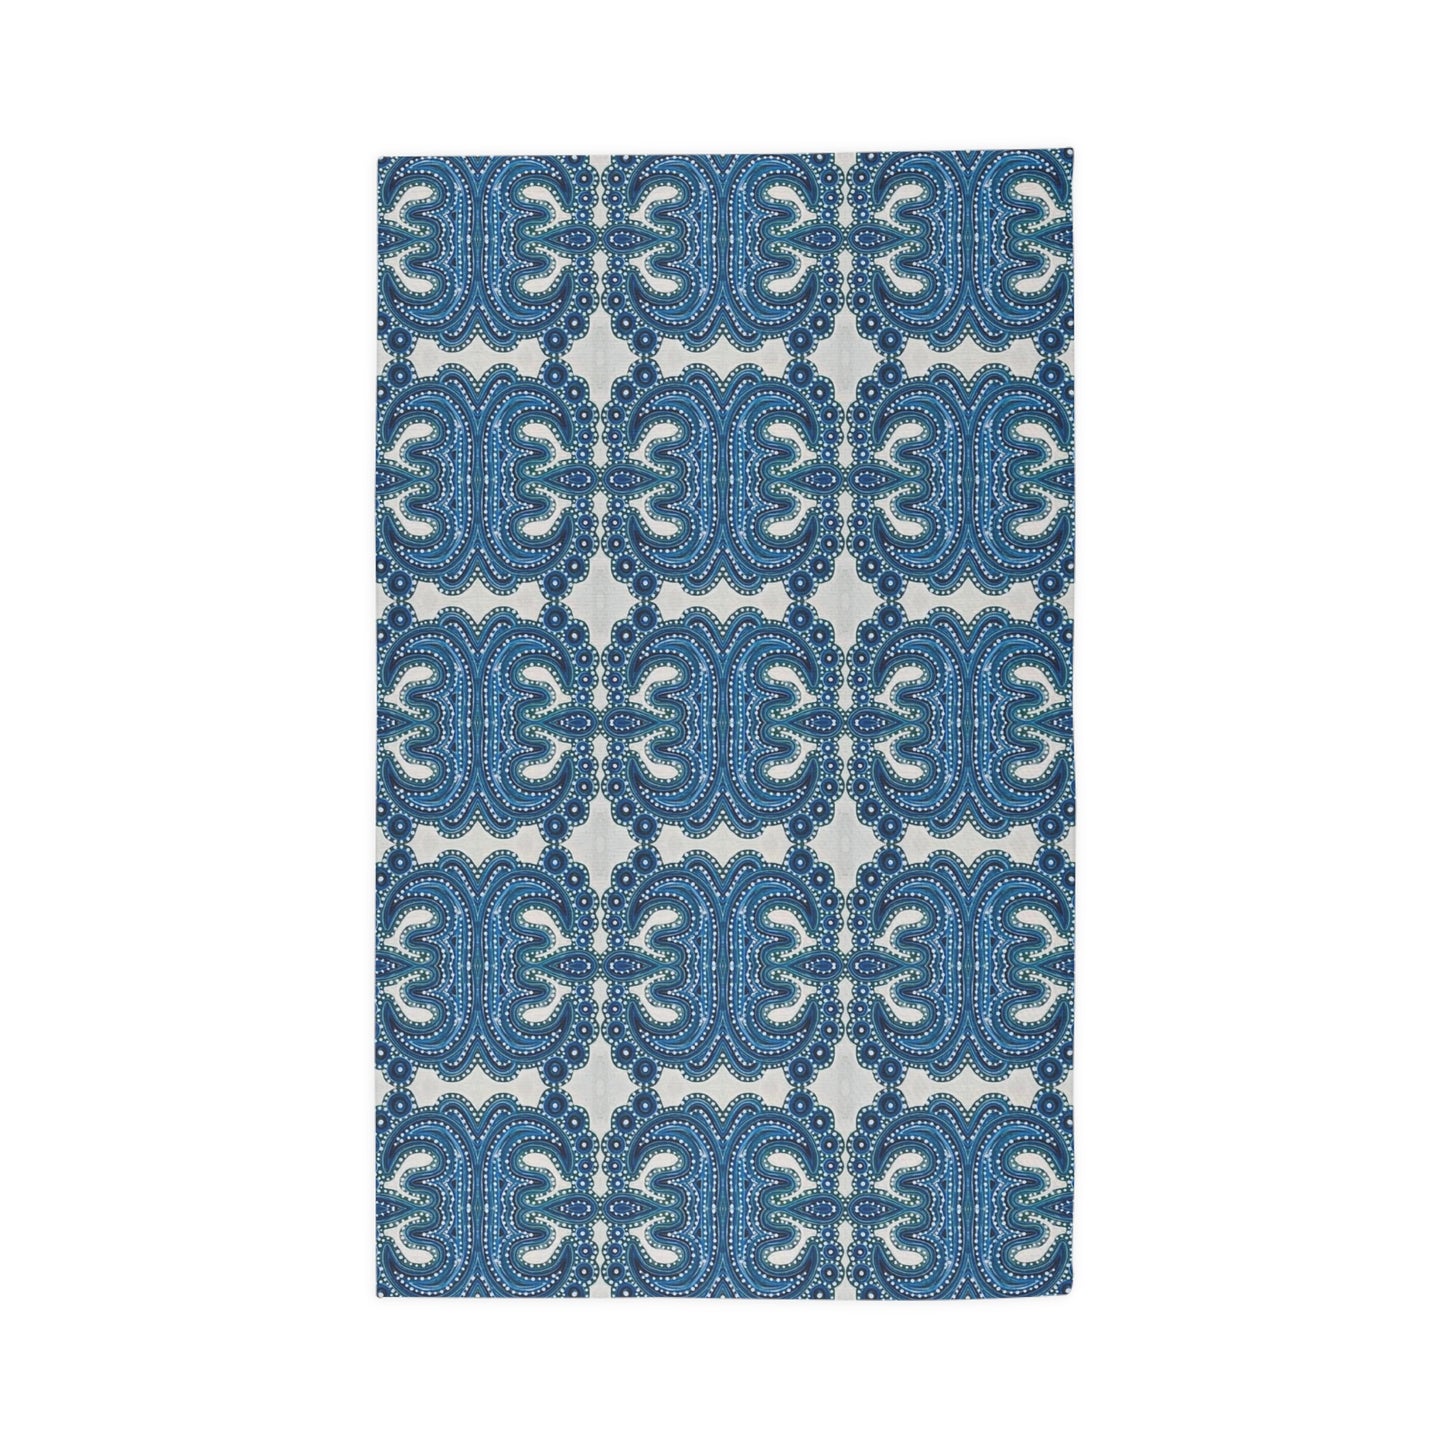 Blue Tile Woven Rug